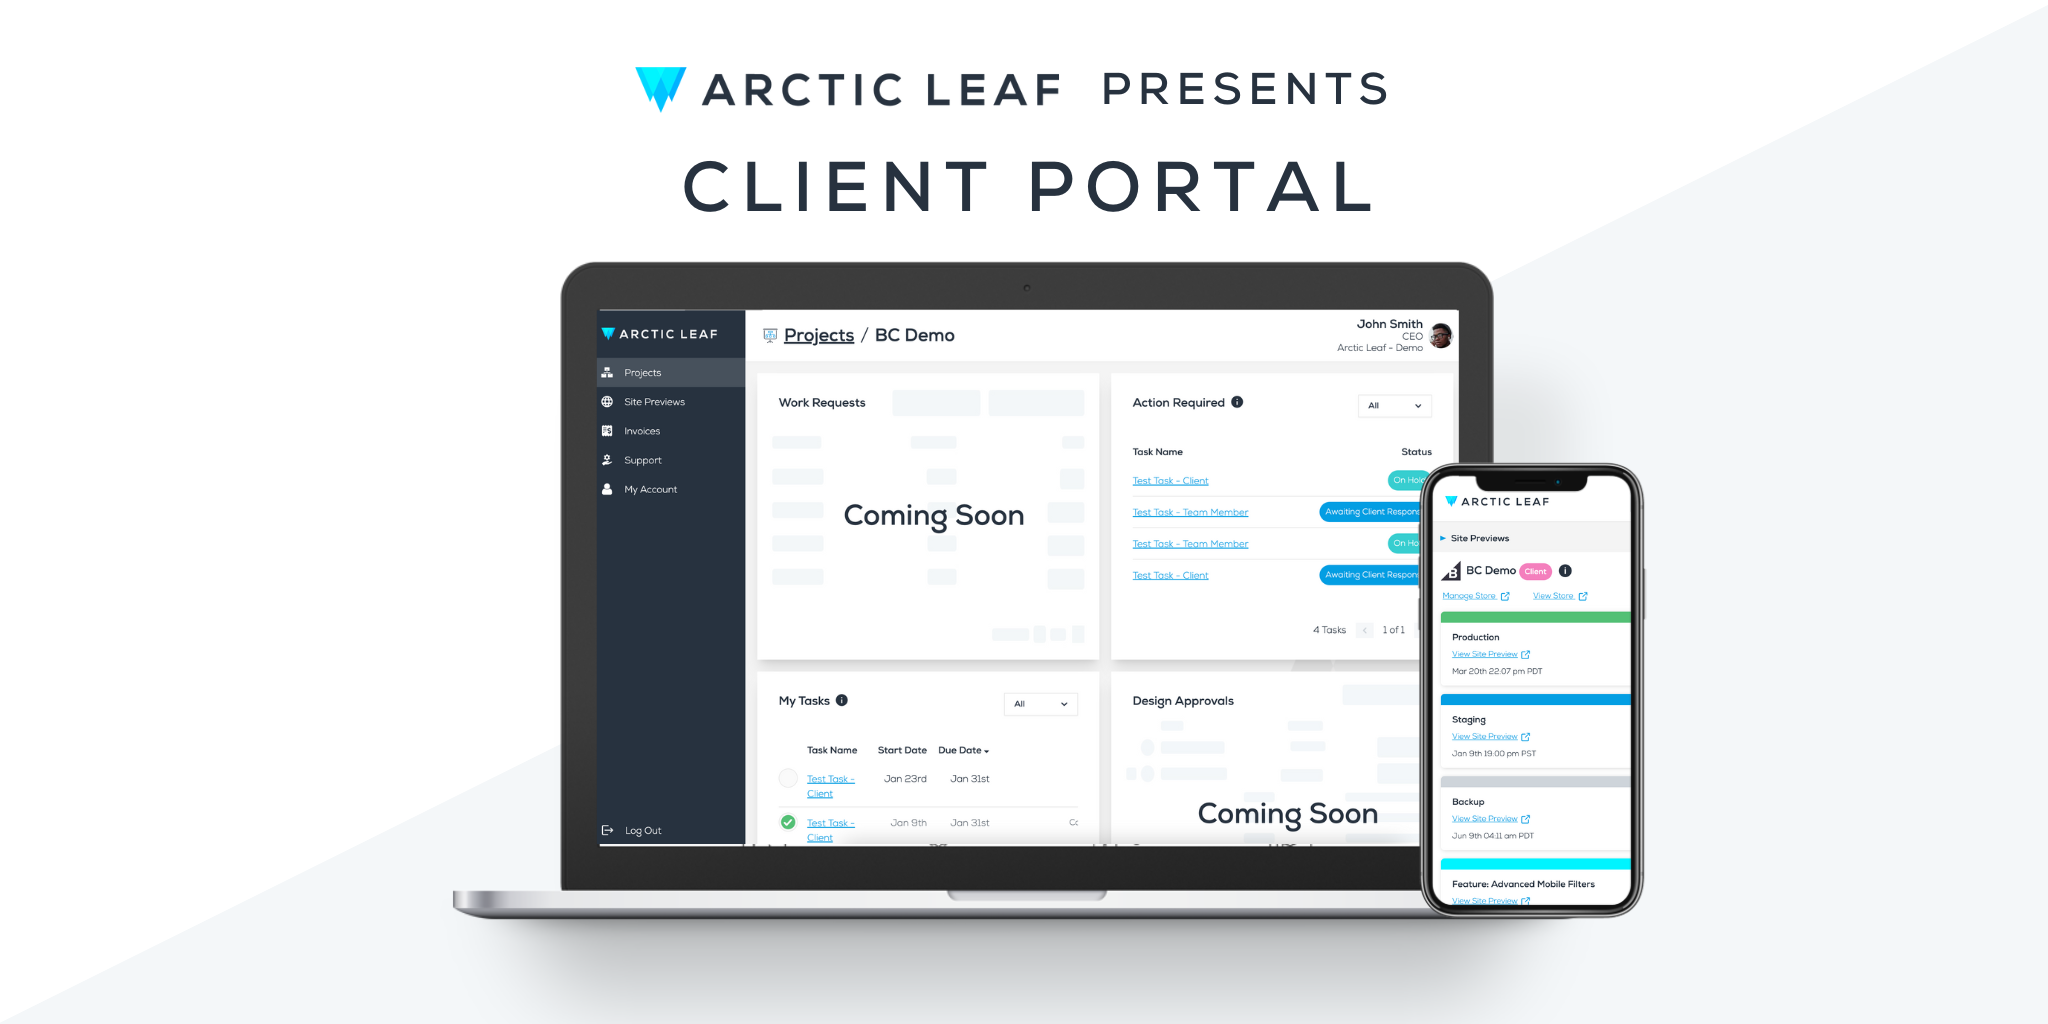 Arctic Leaf launches new Client Portal to help e-commerce businesses client experience